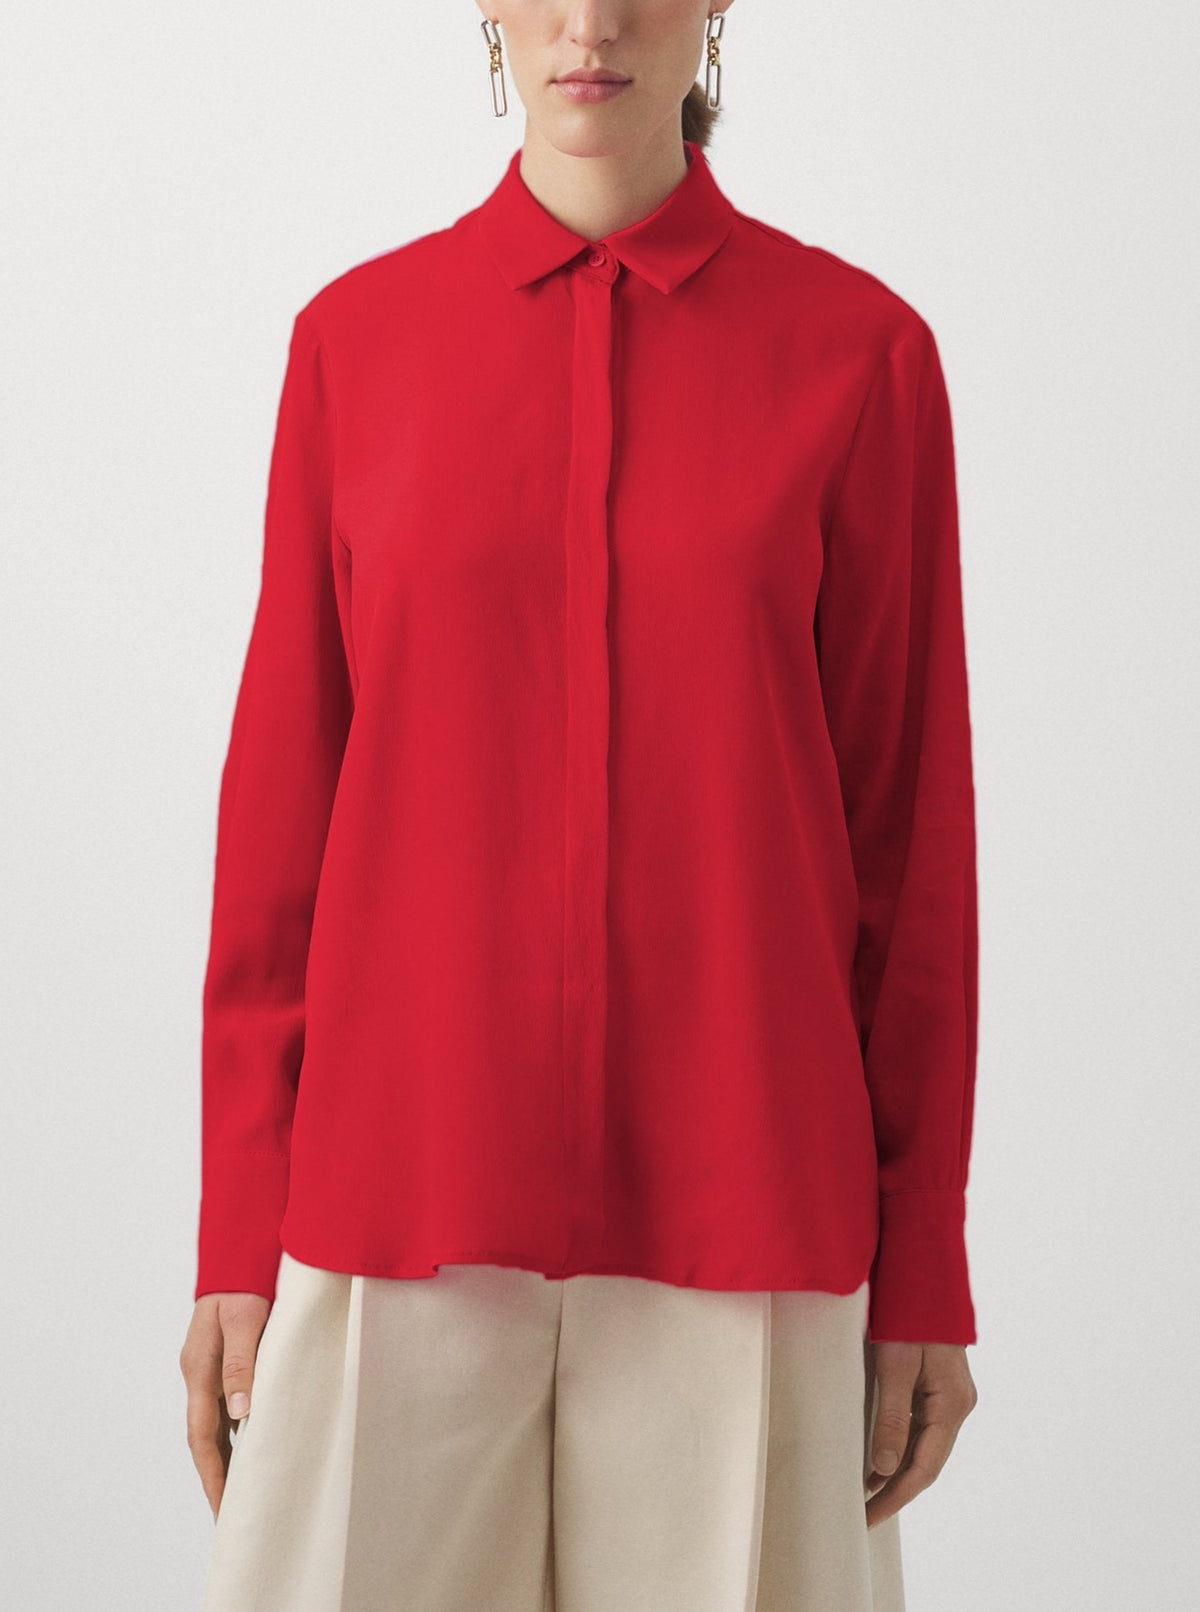 Marella Doris Shirt - Size 6 Available